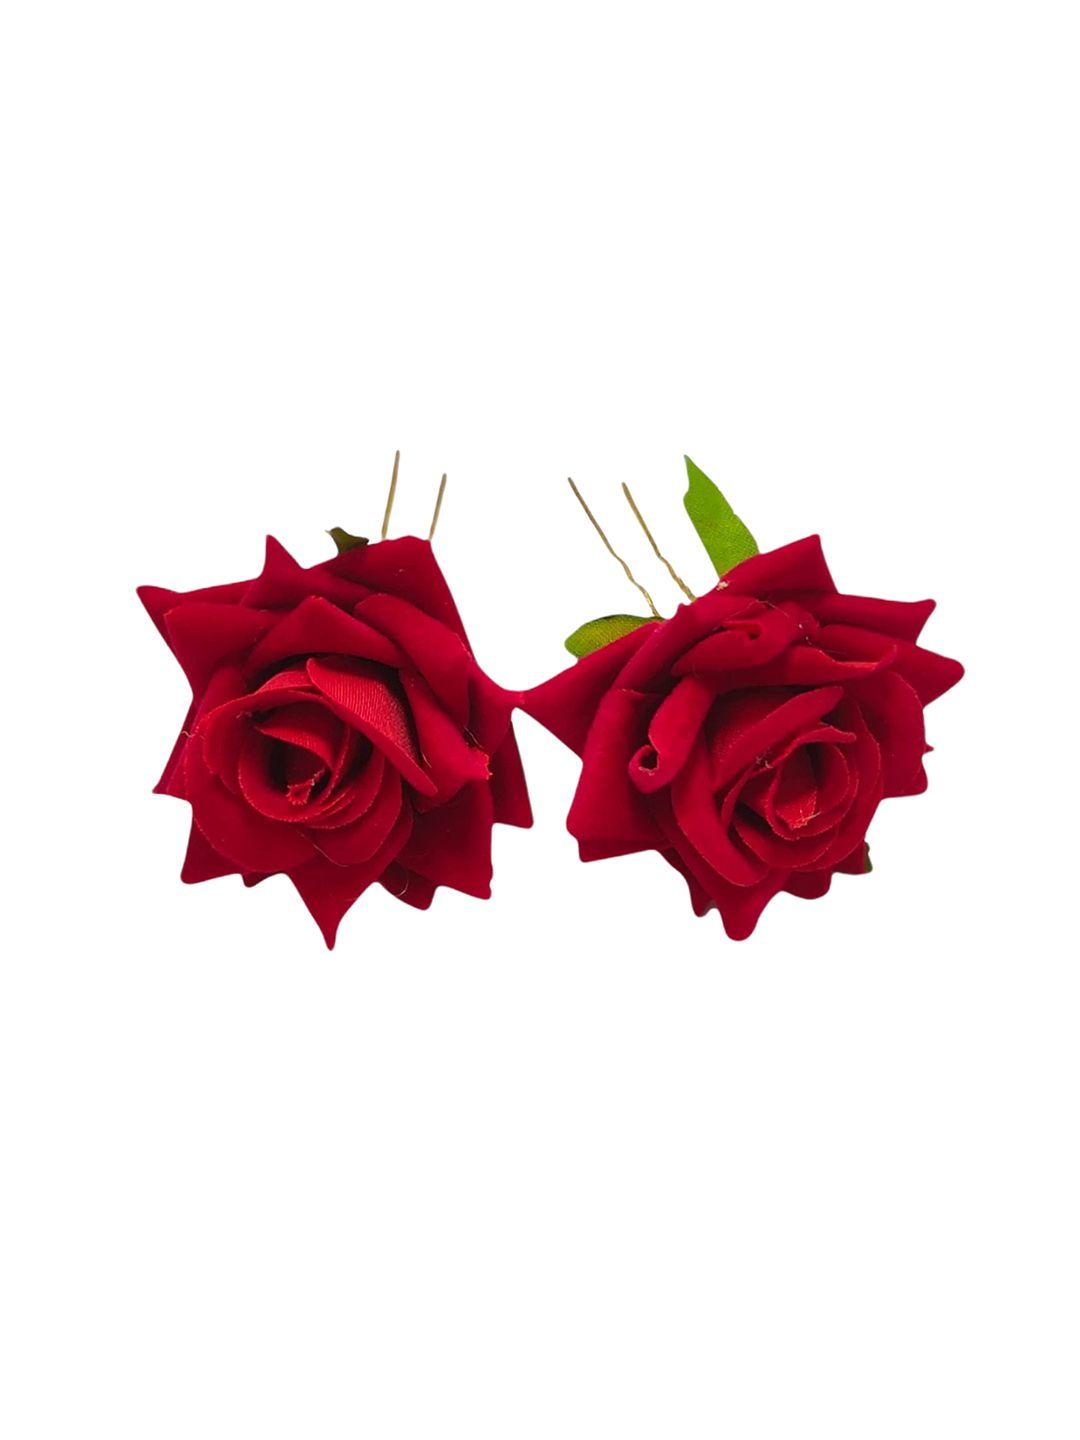 chronex set of 2 bride rose floral pin, handmade u-shaped elegant red rose juda pin